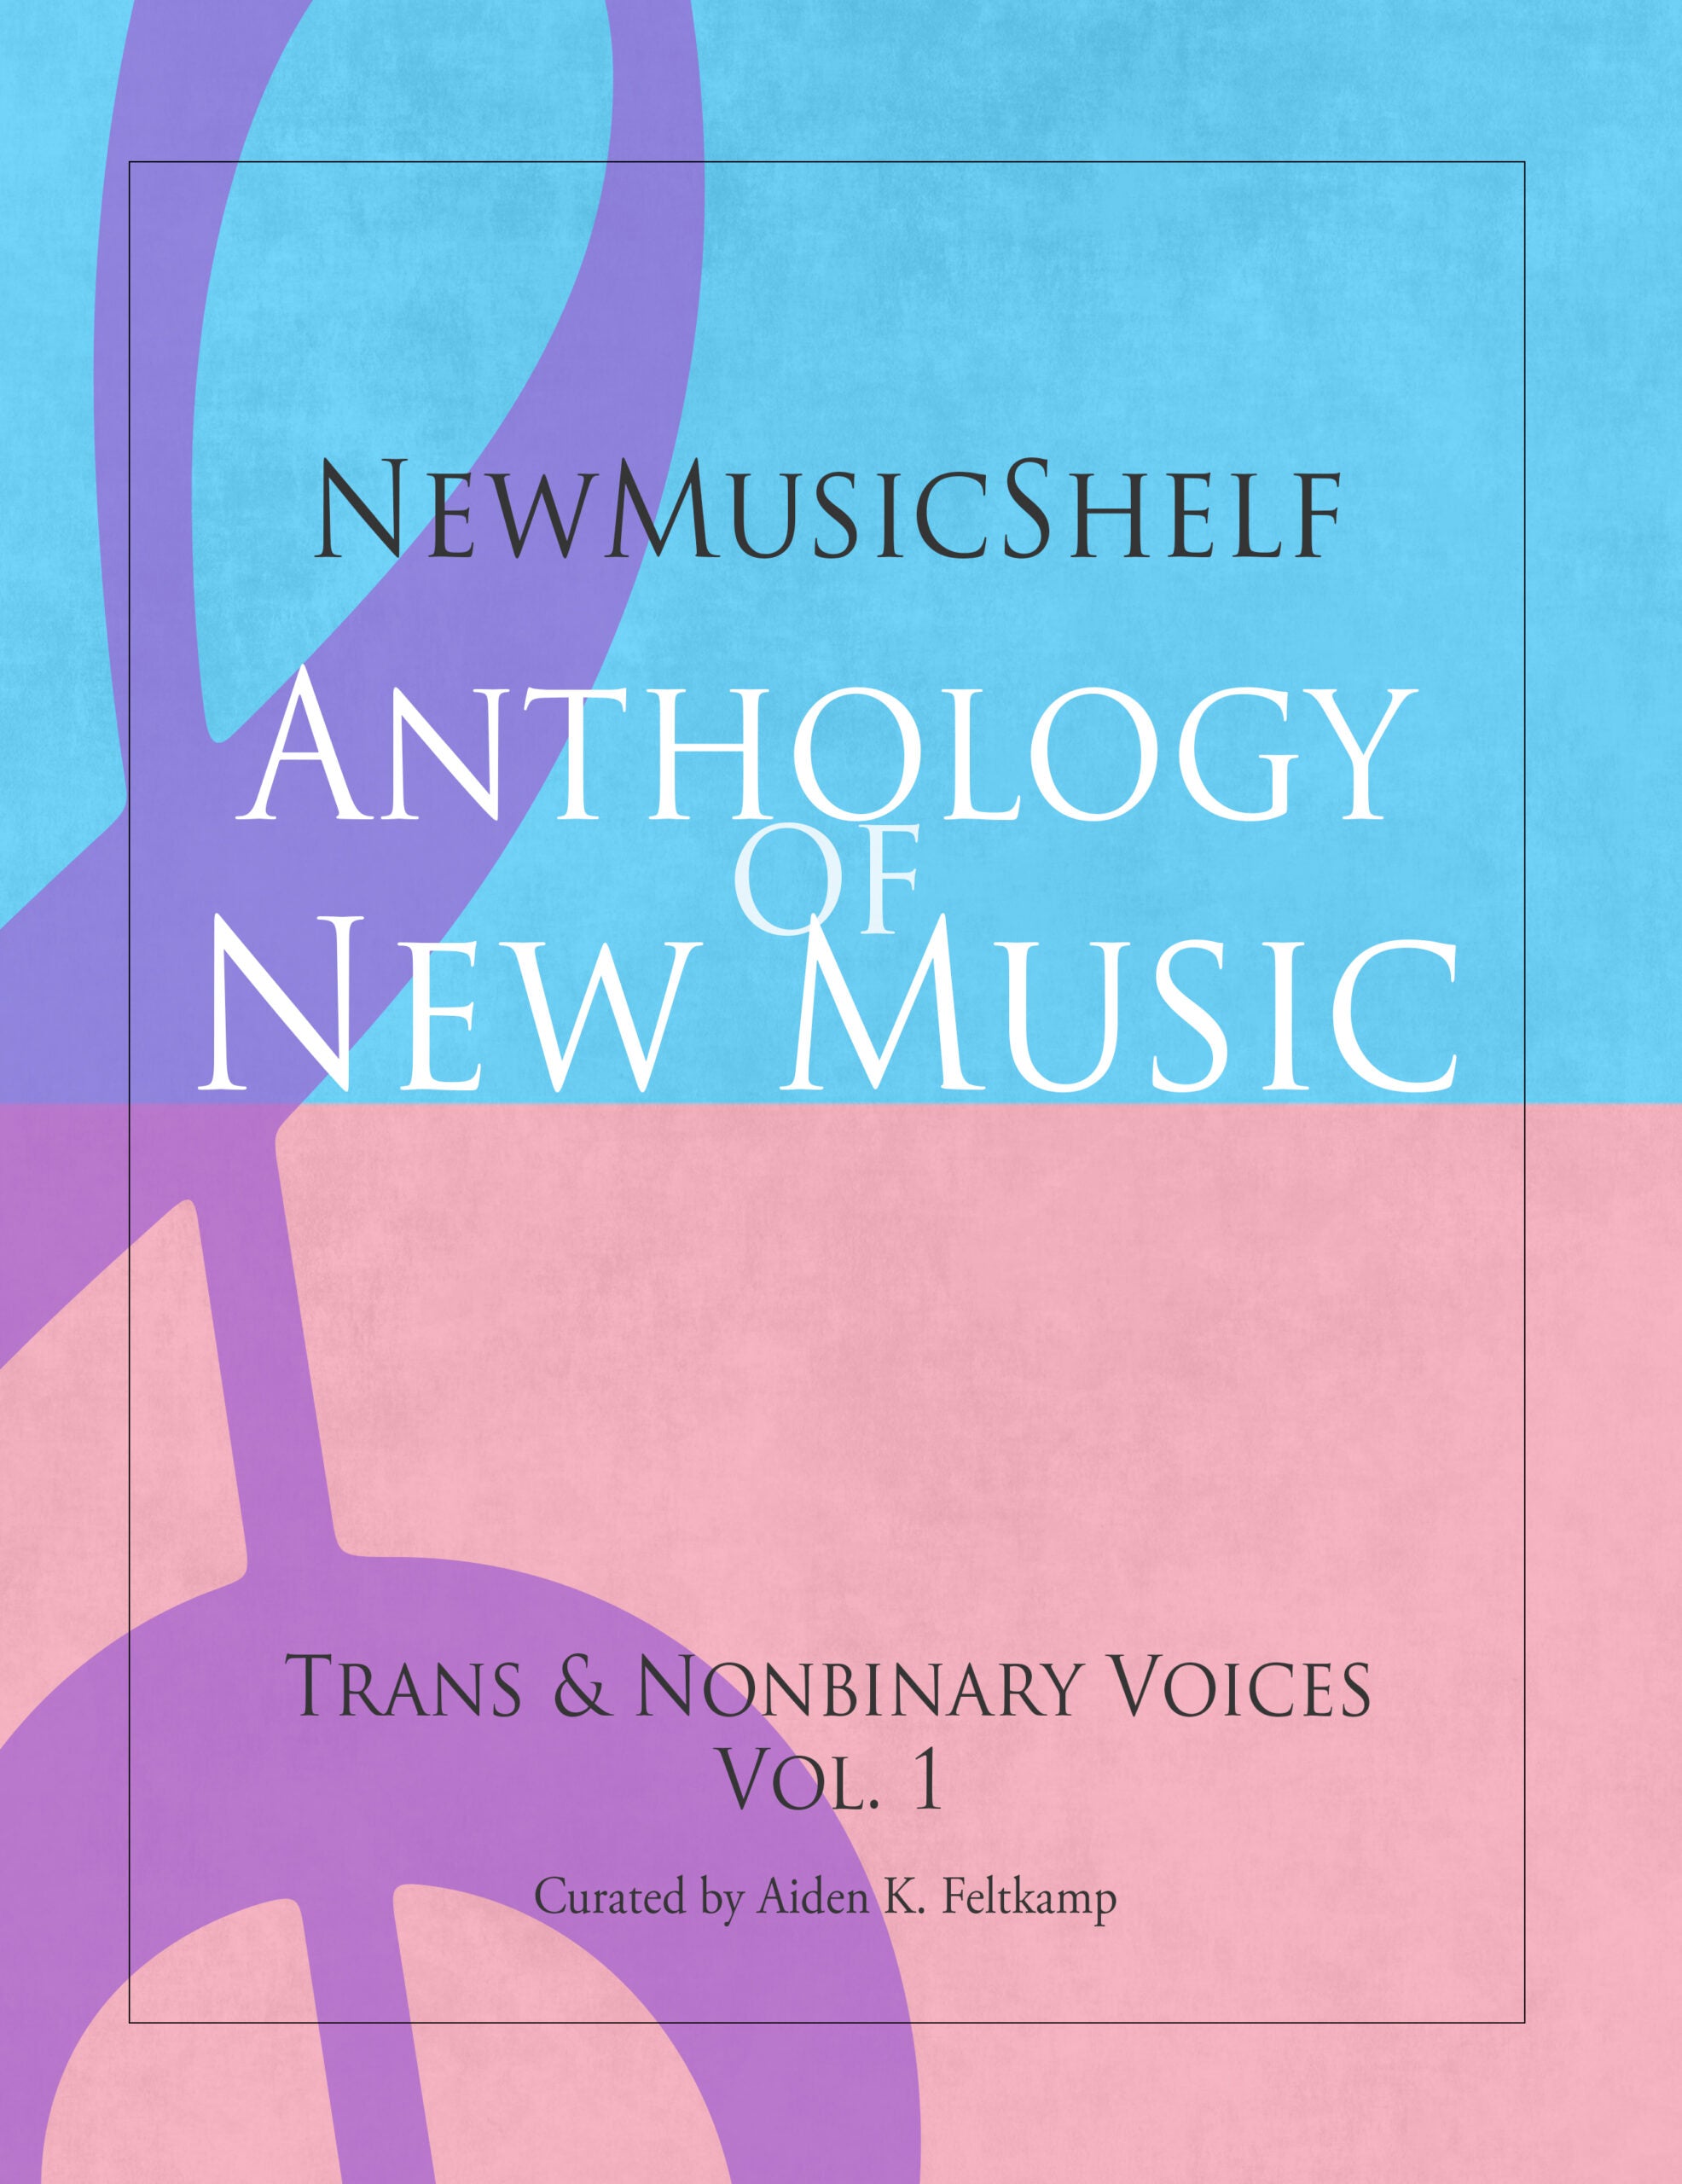 Trans & Nonbinary Voices - Volume 1